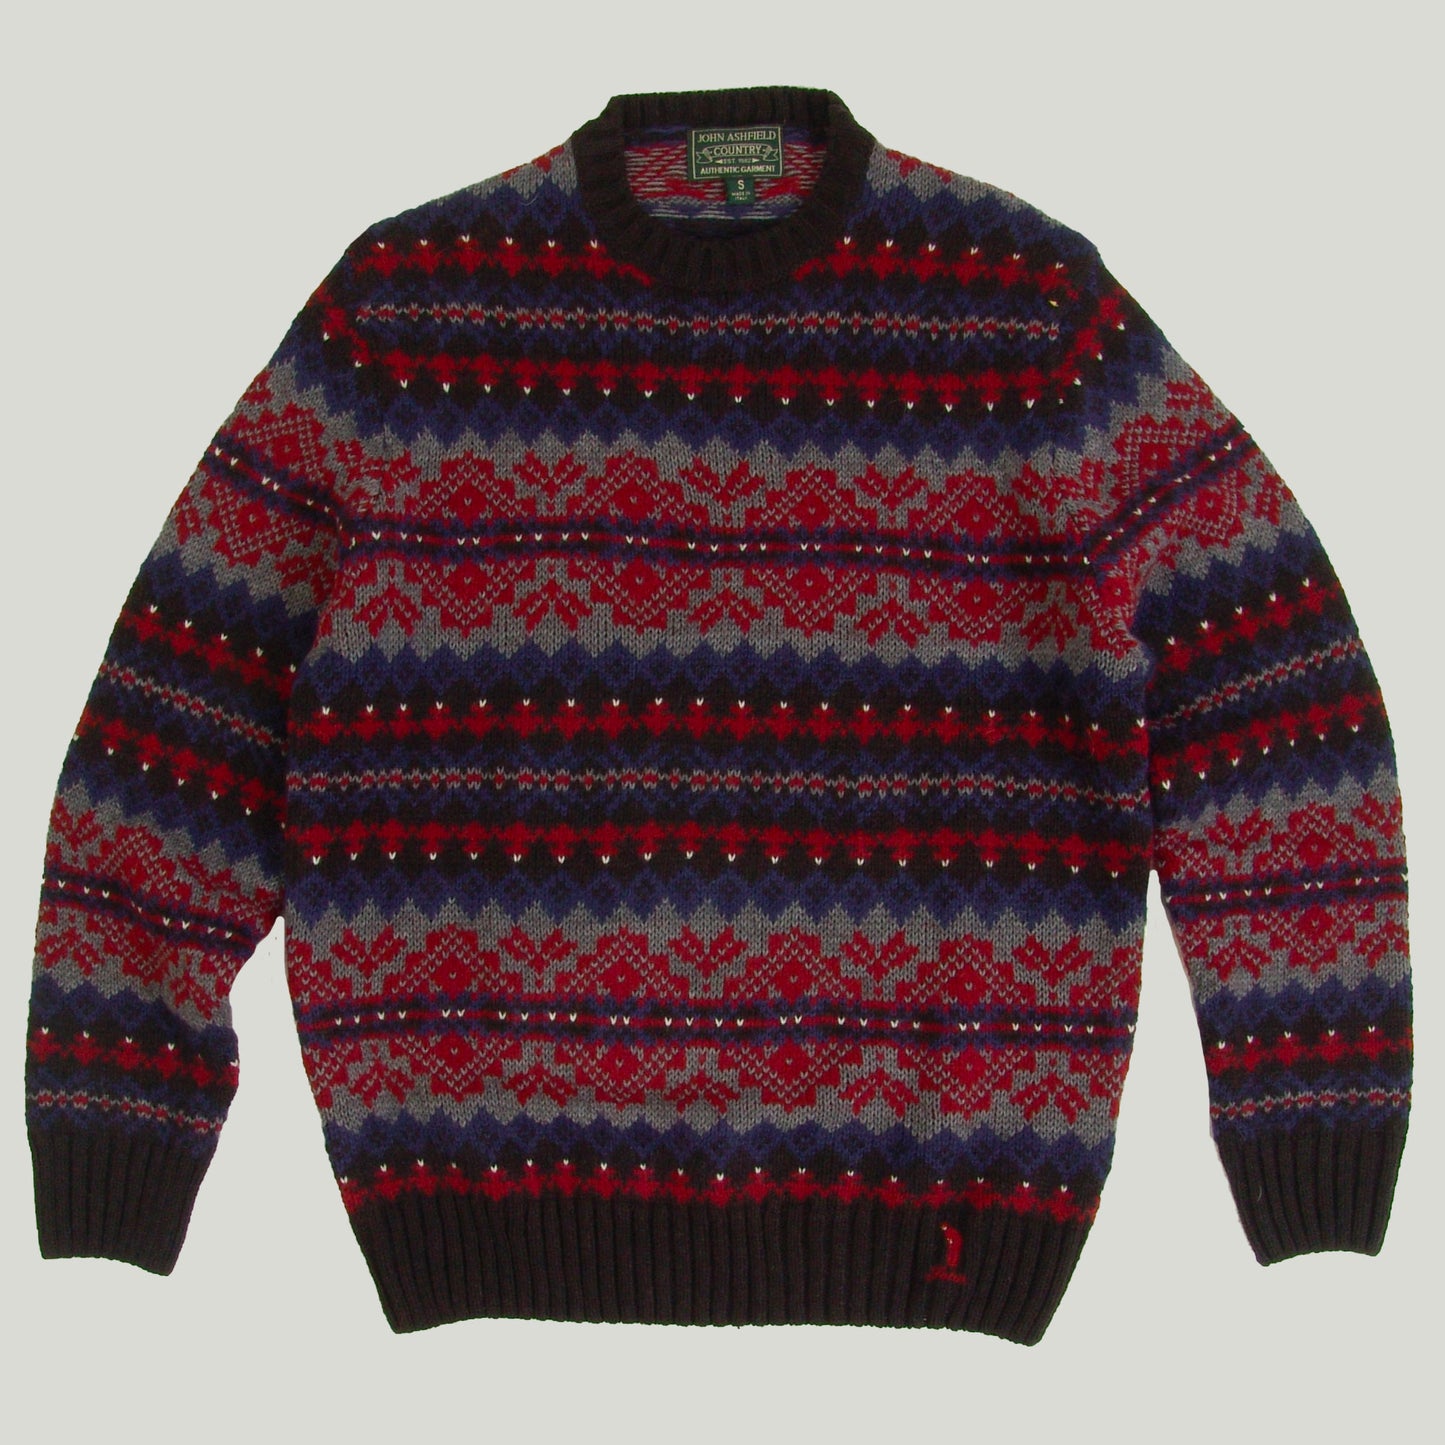 Snowflake Sweater for Men